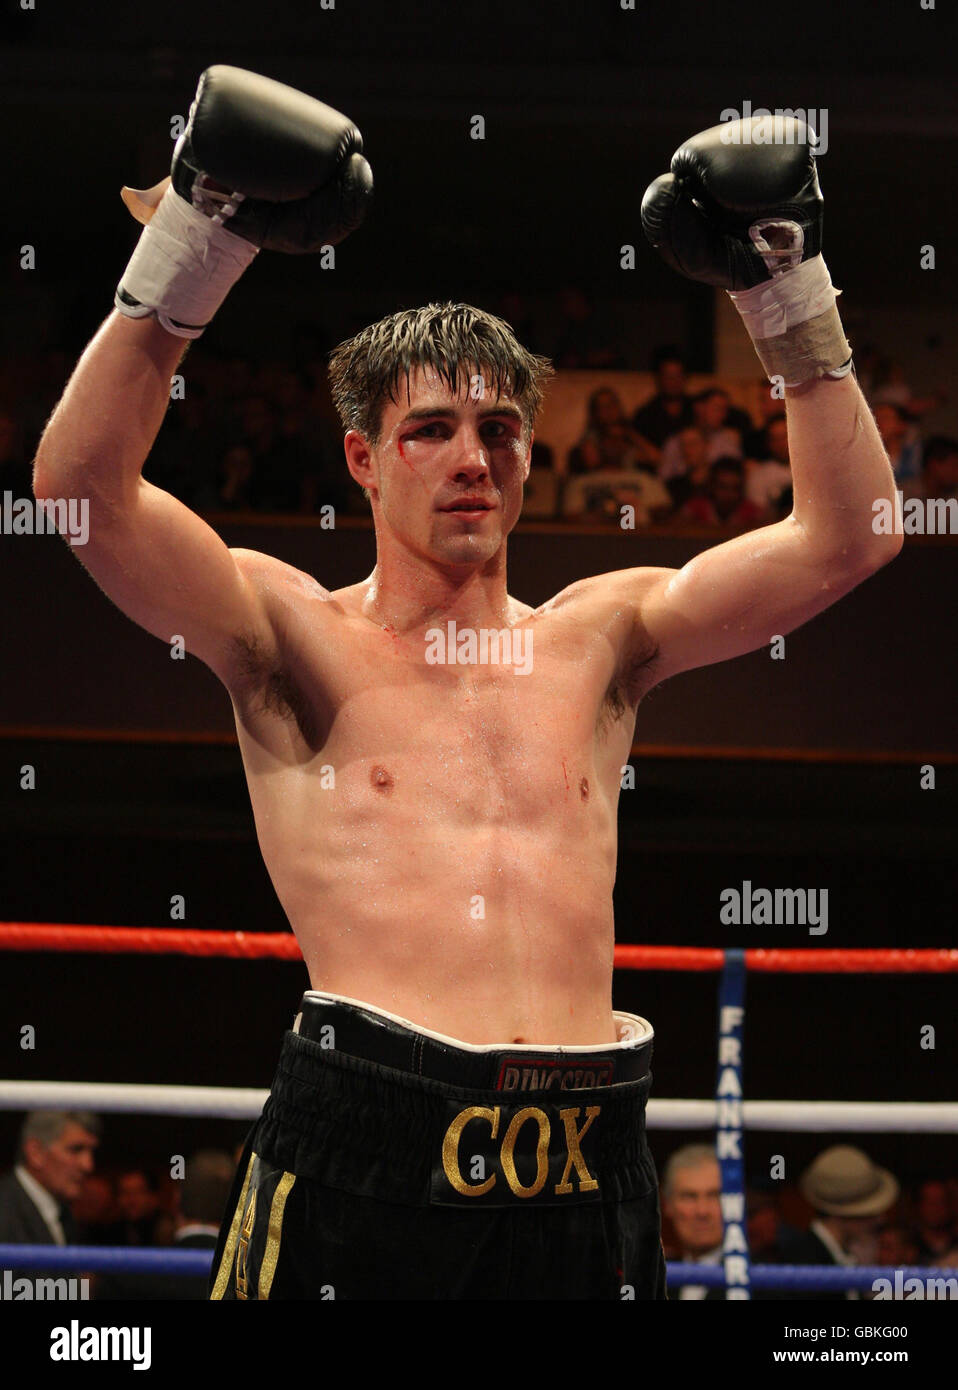 Boxing - Eliminatore Welterweight Title Bout - Jamie Cox v Mark Lloyd - Wolverhampton sala civica Foto Stock